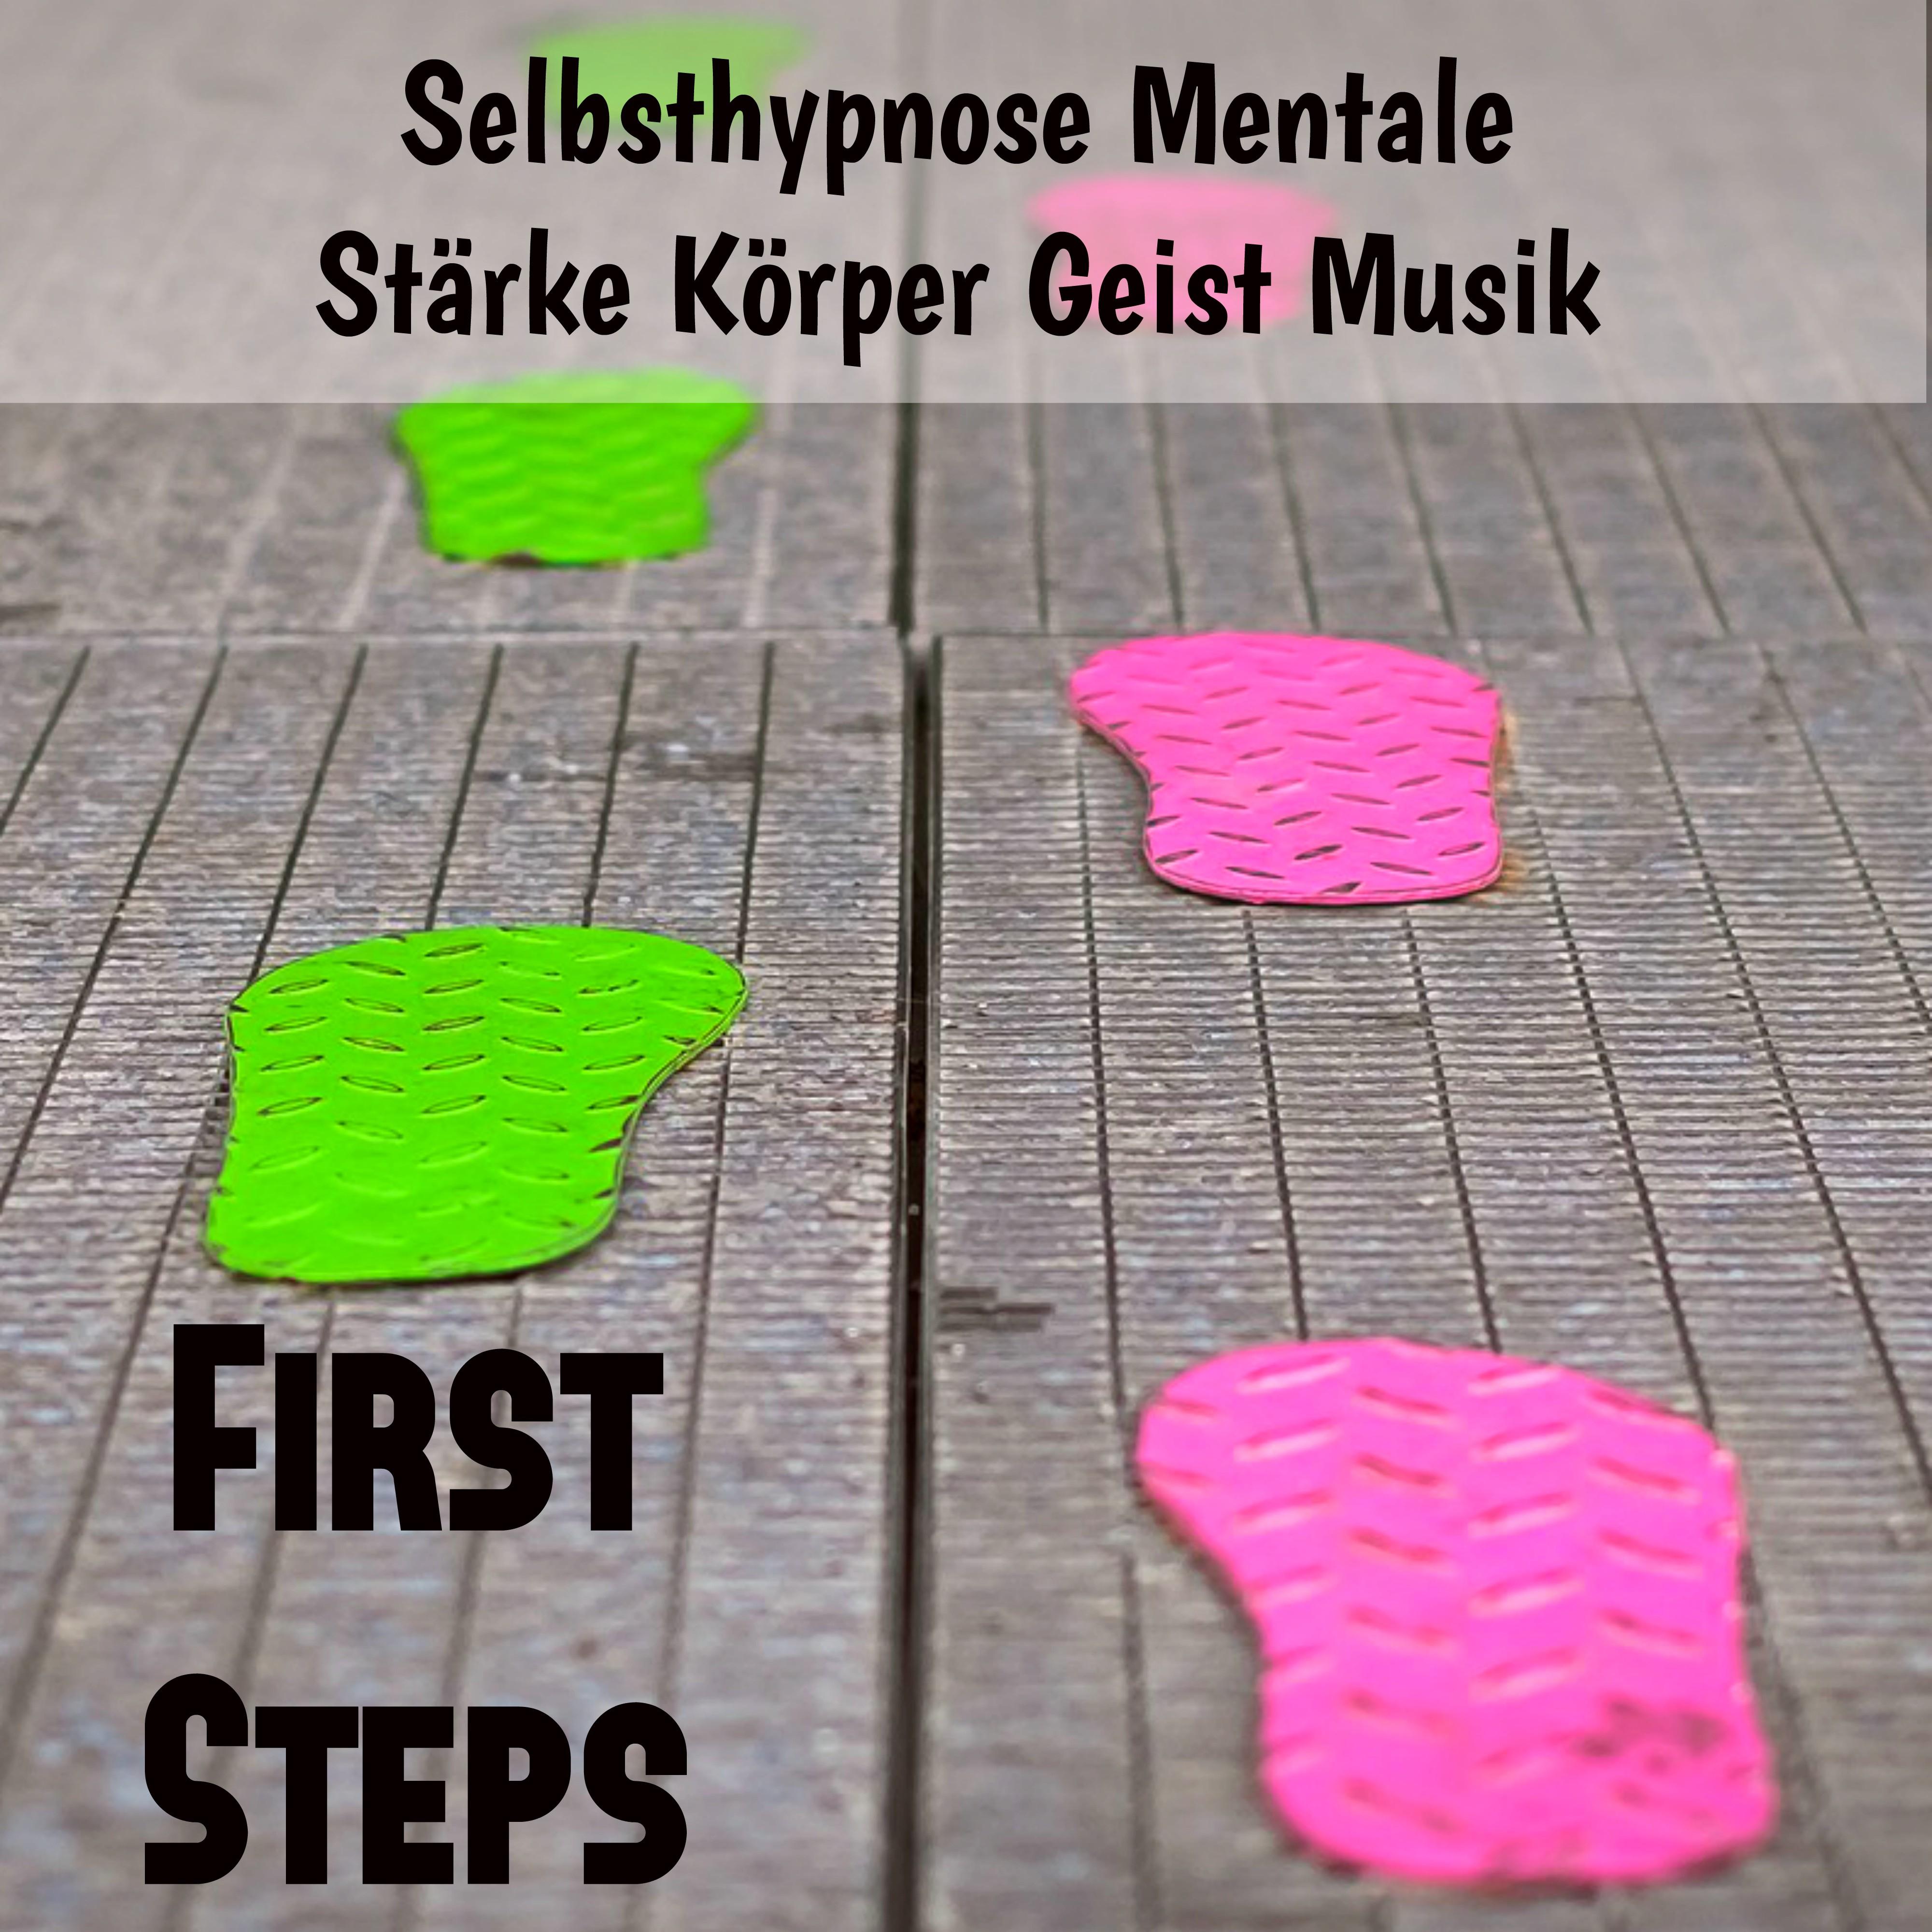 First Steps - Selbsthypnose Mentale Stärke Körper Geist Musik mit Natur Beruhigende New Age Geräusche